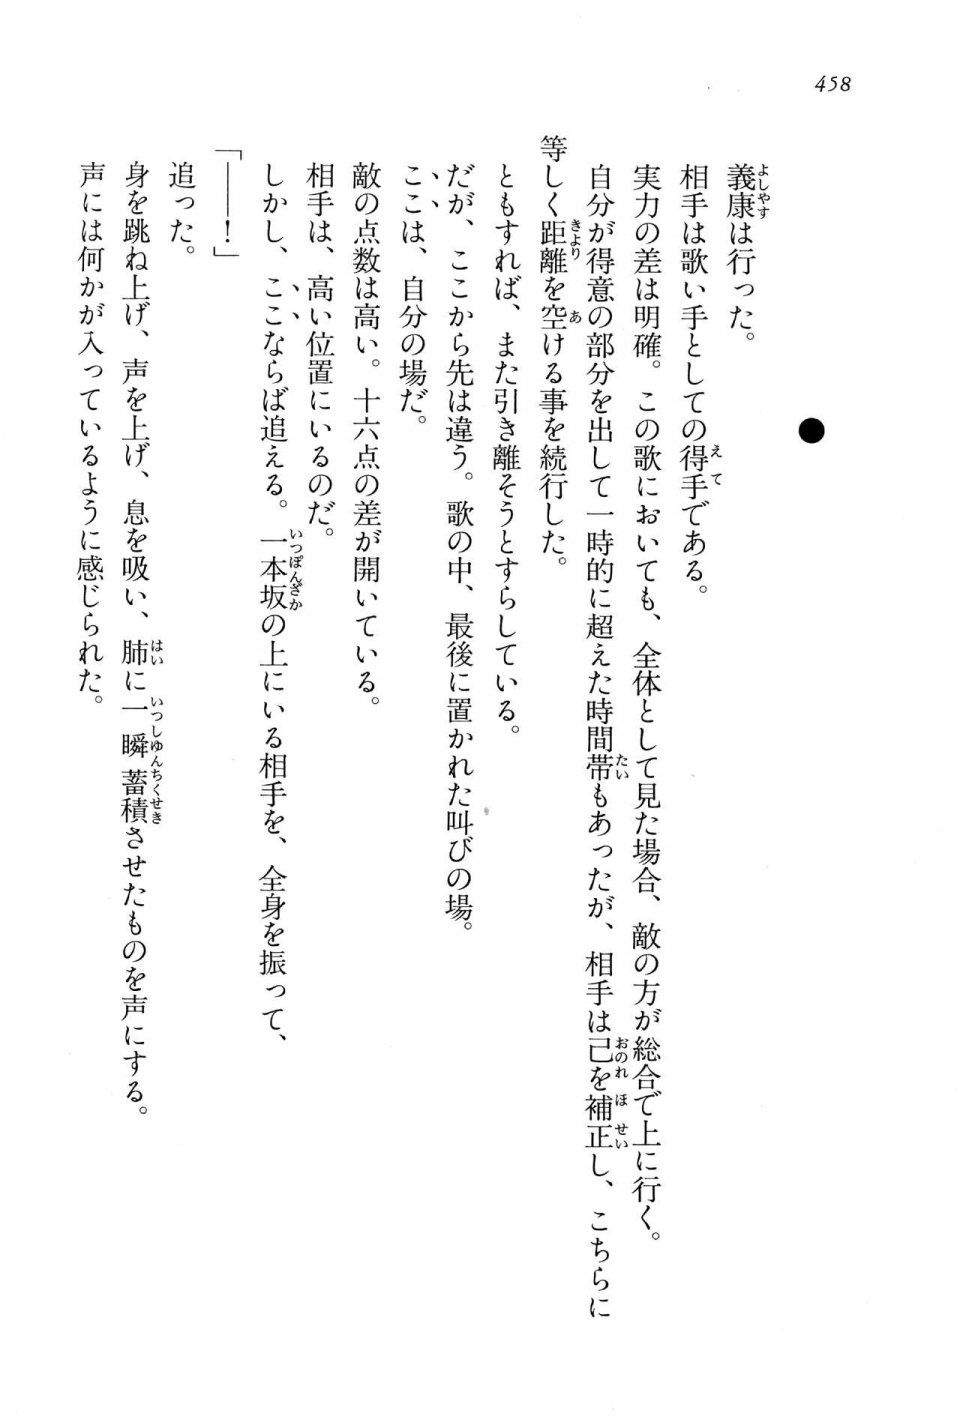 Kyoukai Senjou no Horizon LN Vol 15(6C) Part 1 - Photo #458